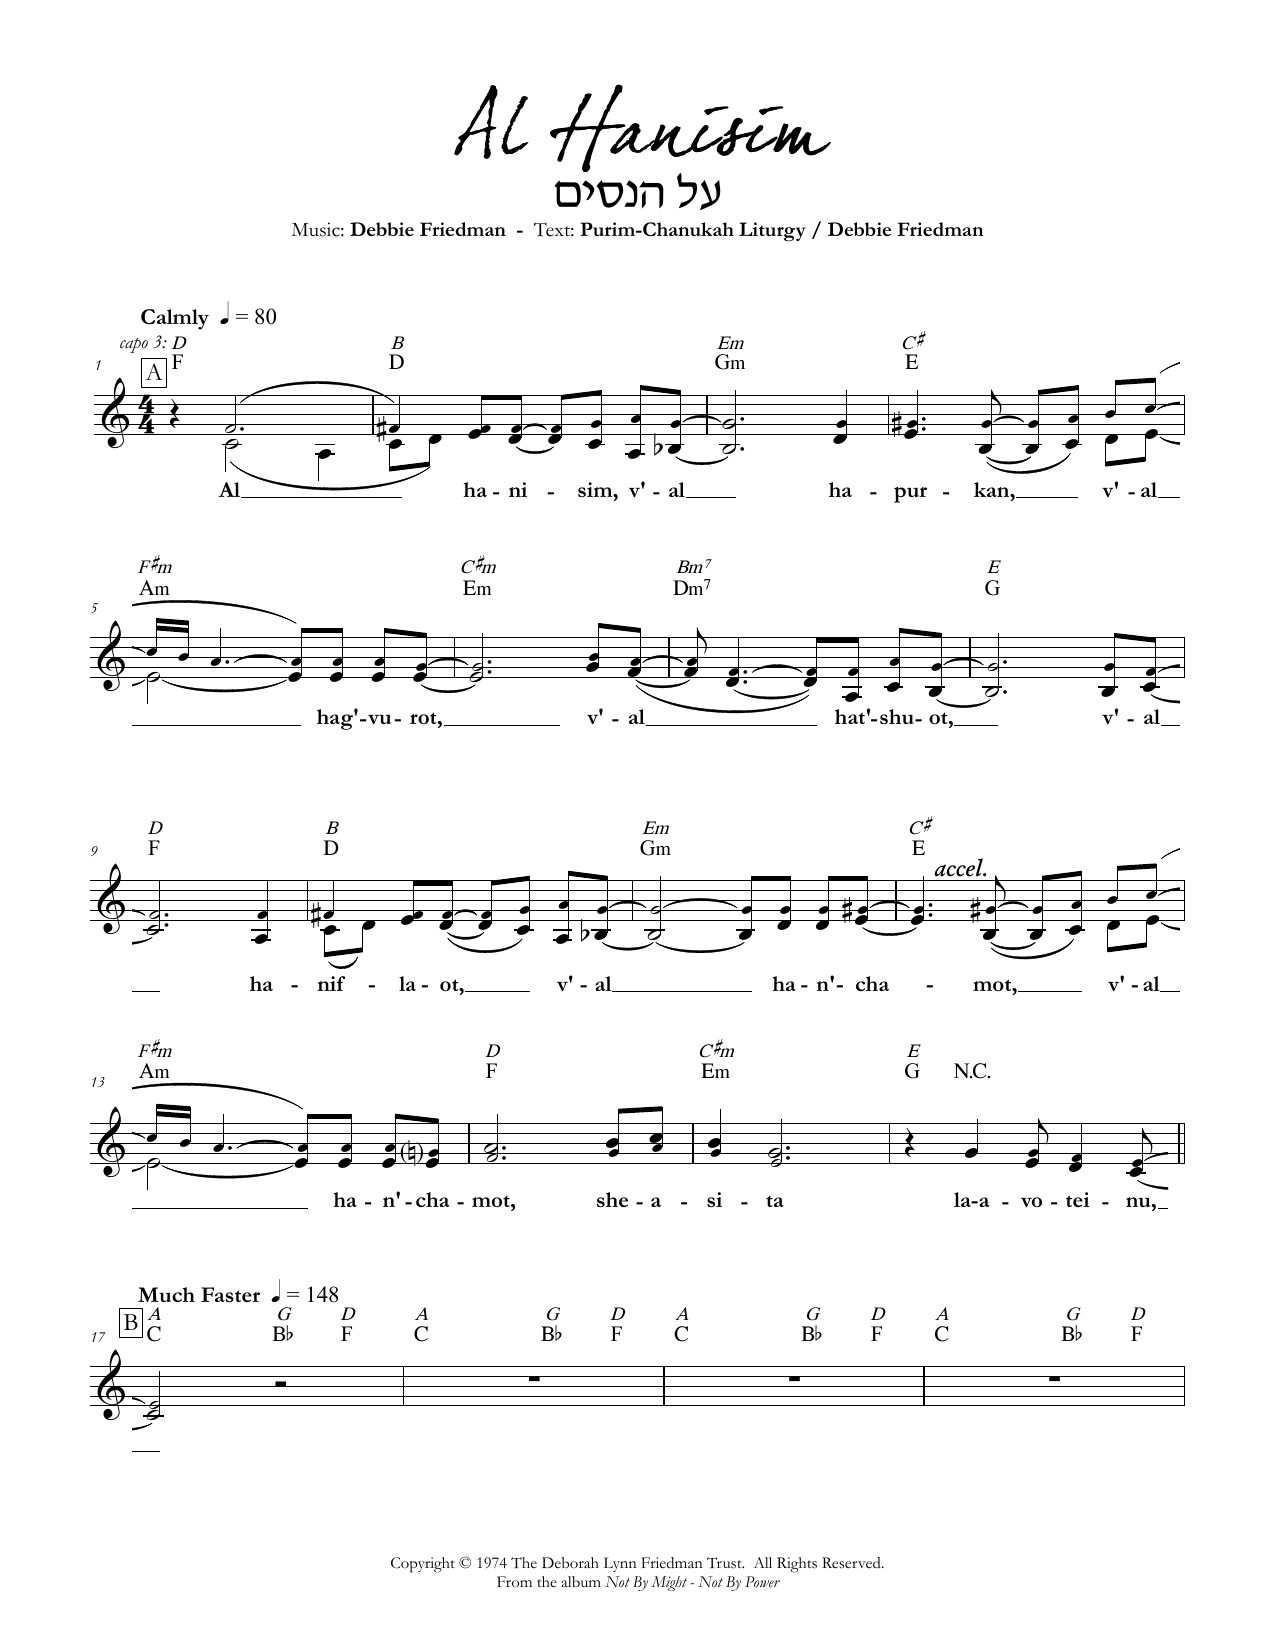 Download Debbie Friedman Al Hanisim Sheet Music and learn how to play Lead Sheet / Fake Book PDF digital score in minutes